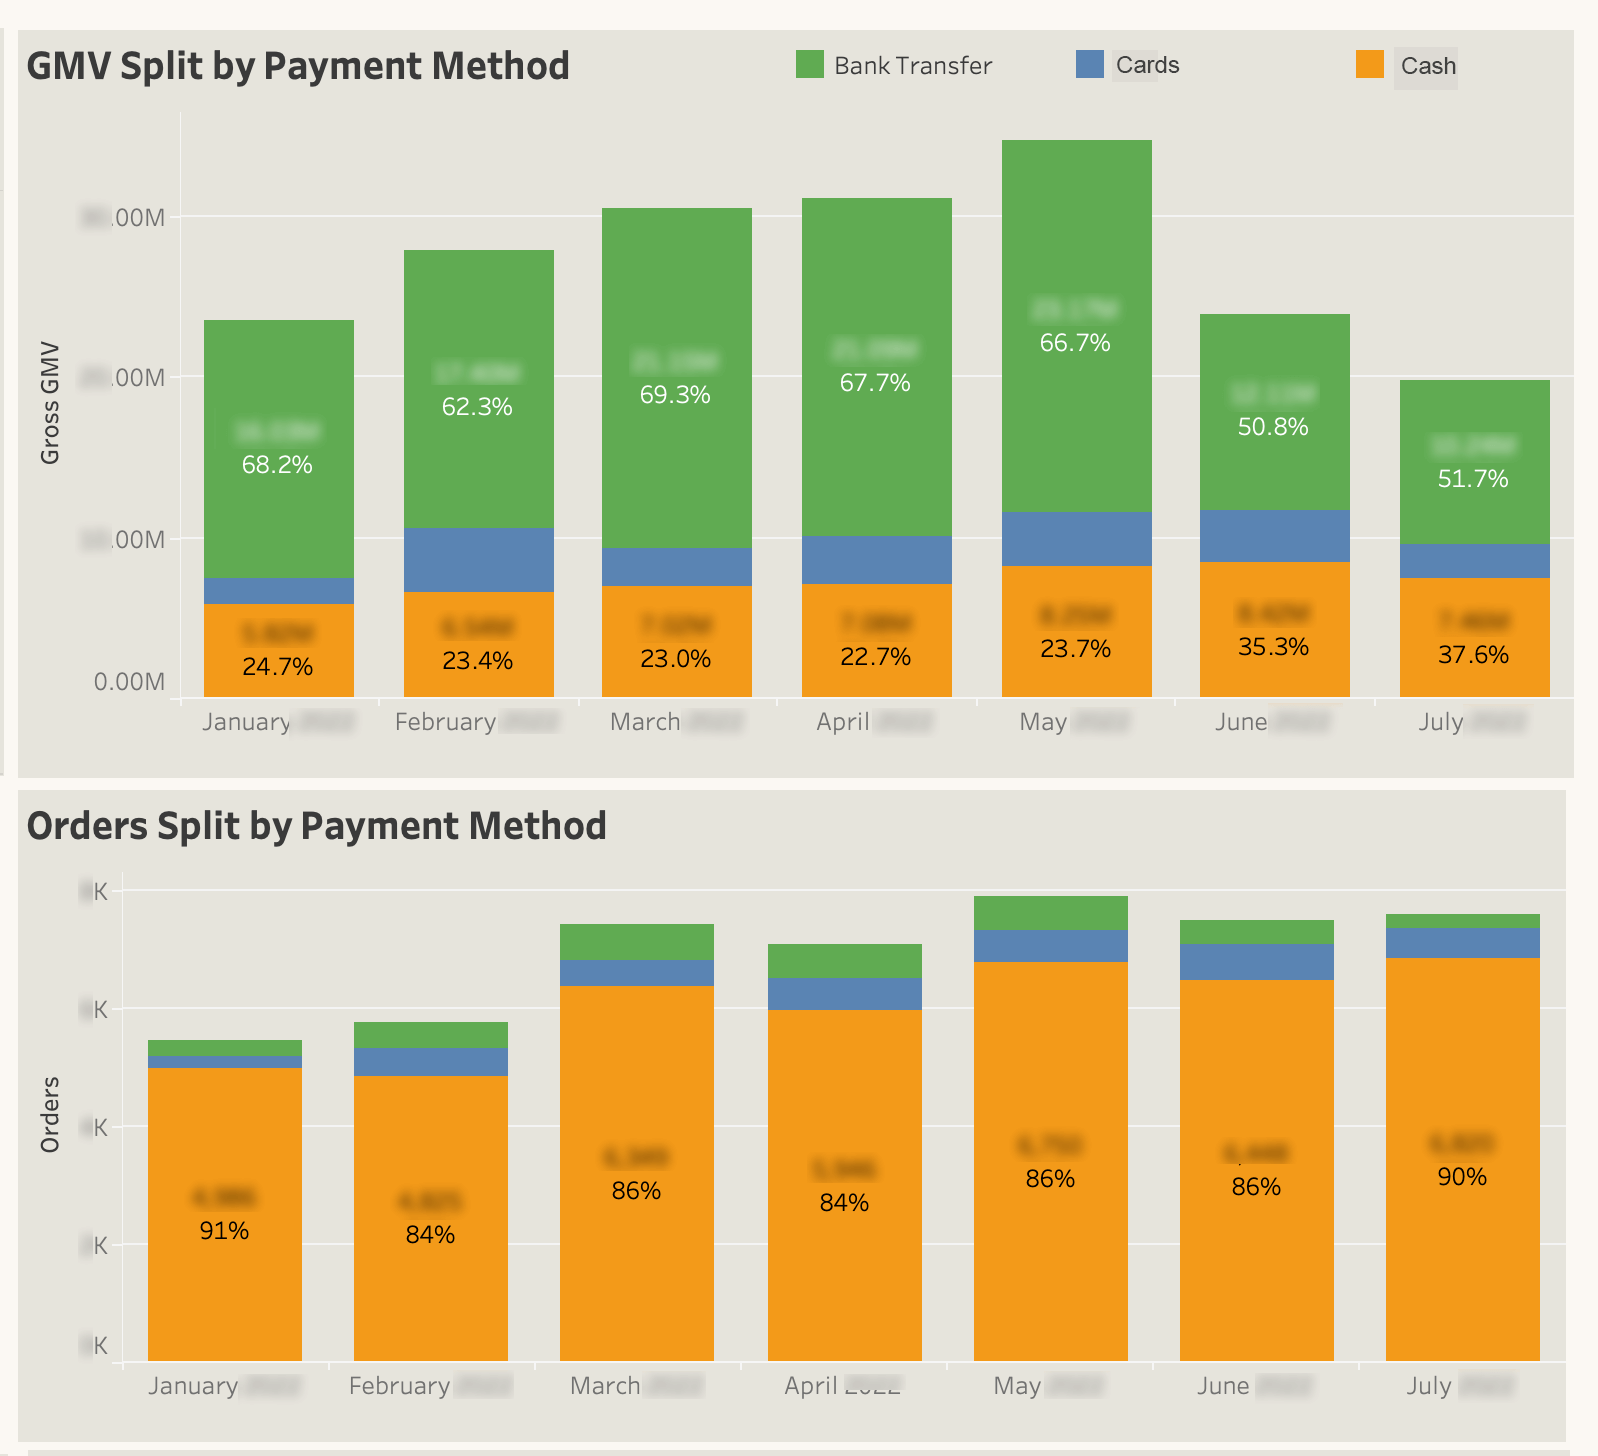 GMV/Order split by payment method